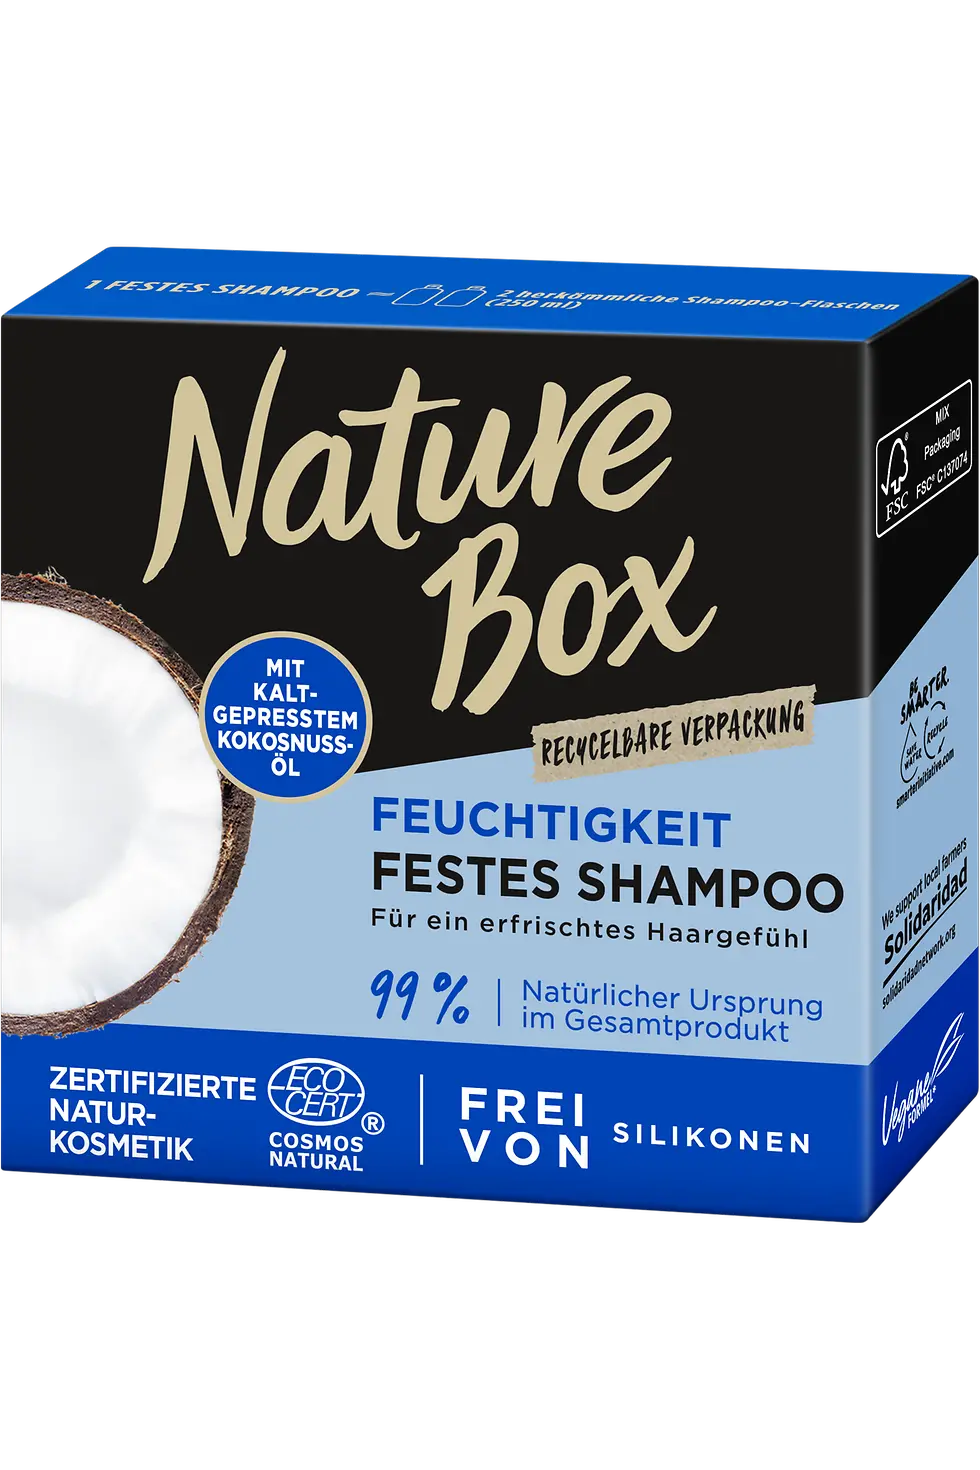 Nature Box Feuchtigkeit Festes Shampoo mit kaltgepresstem Kokosnuss-Öl